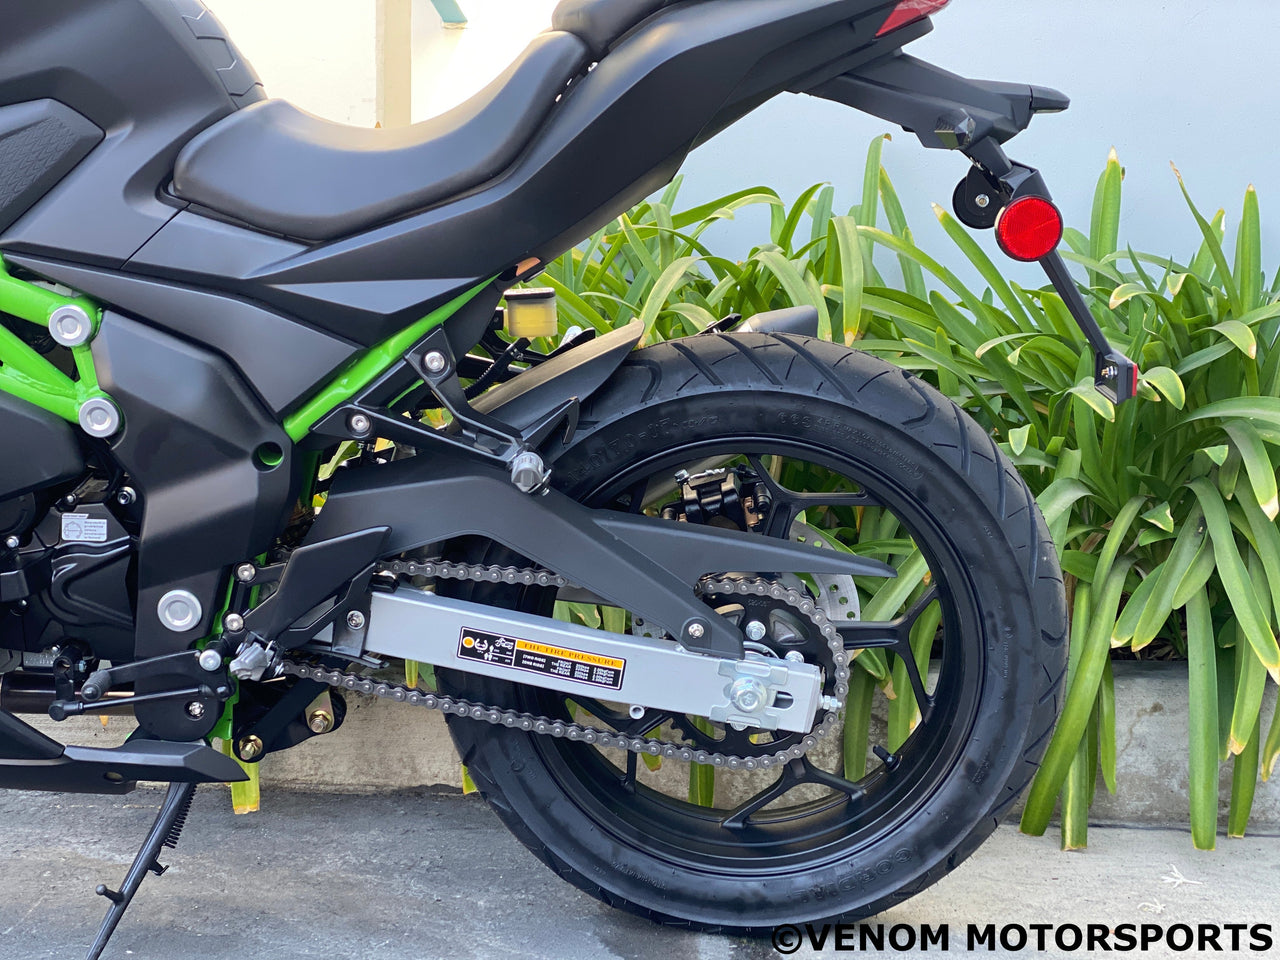 250cc Kawasaki clone bike for sale. Full size motorcycle in canada for cheap